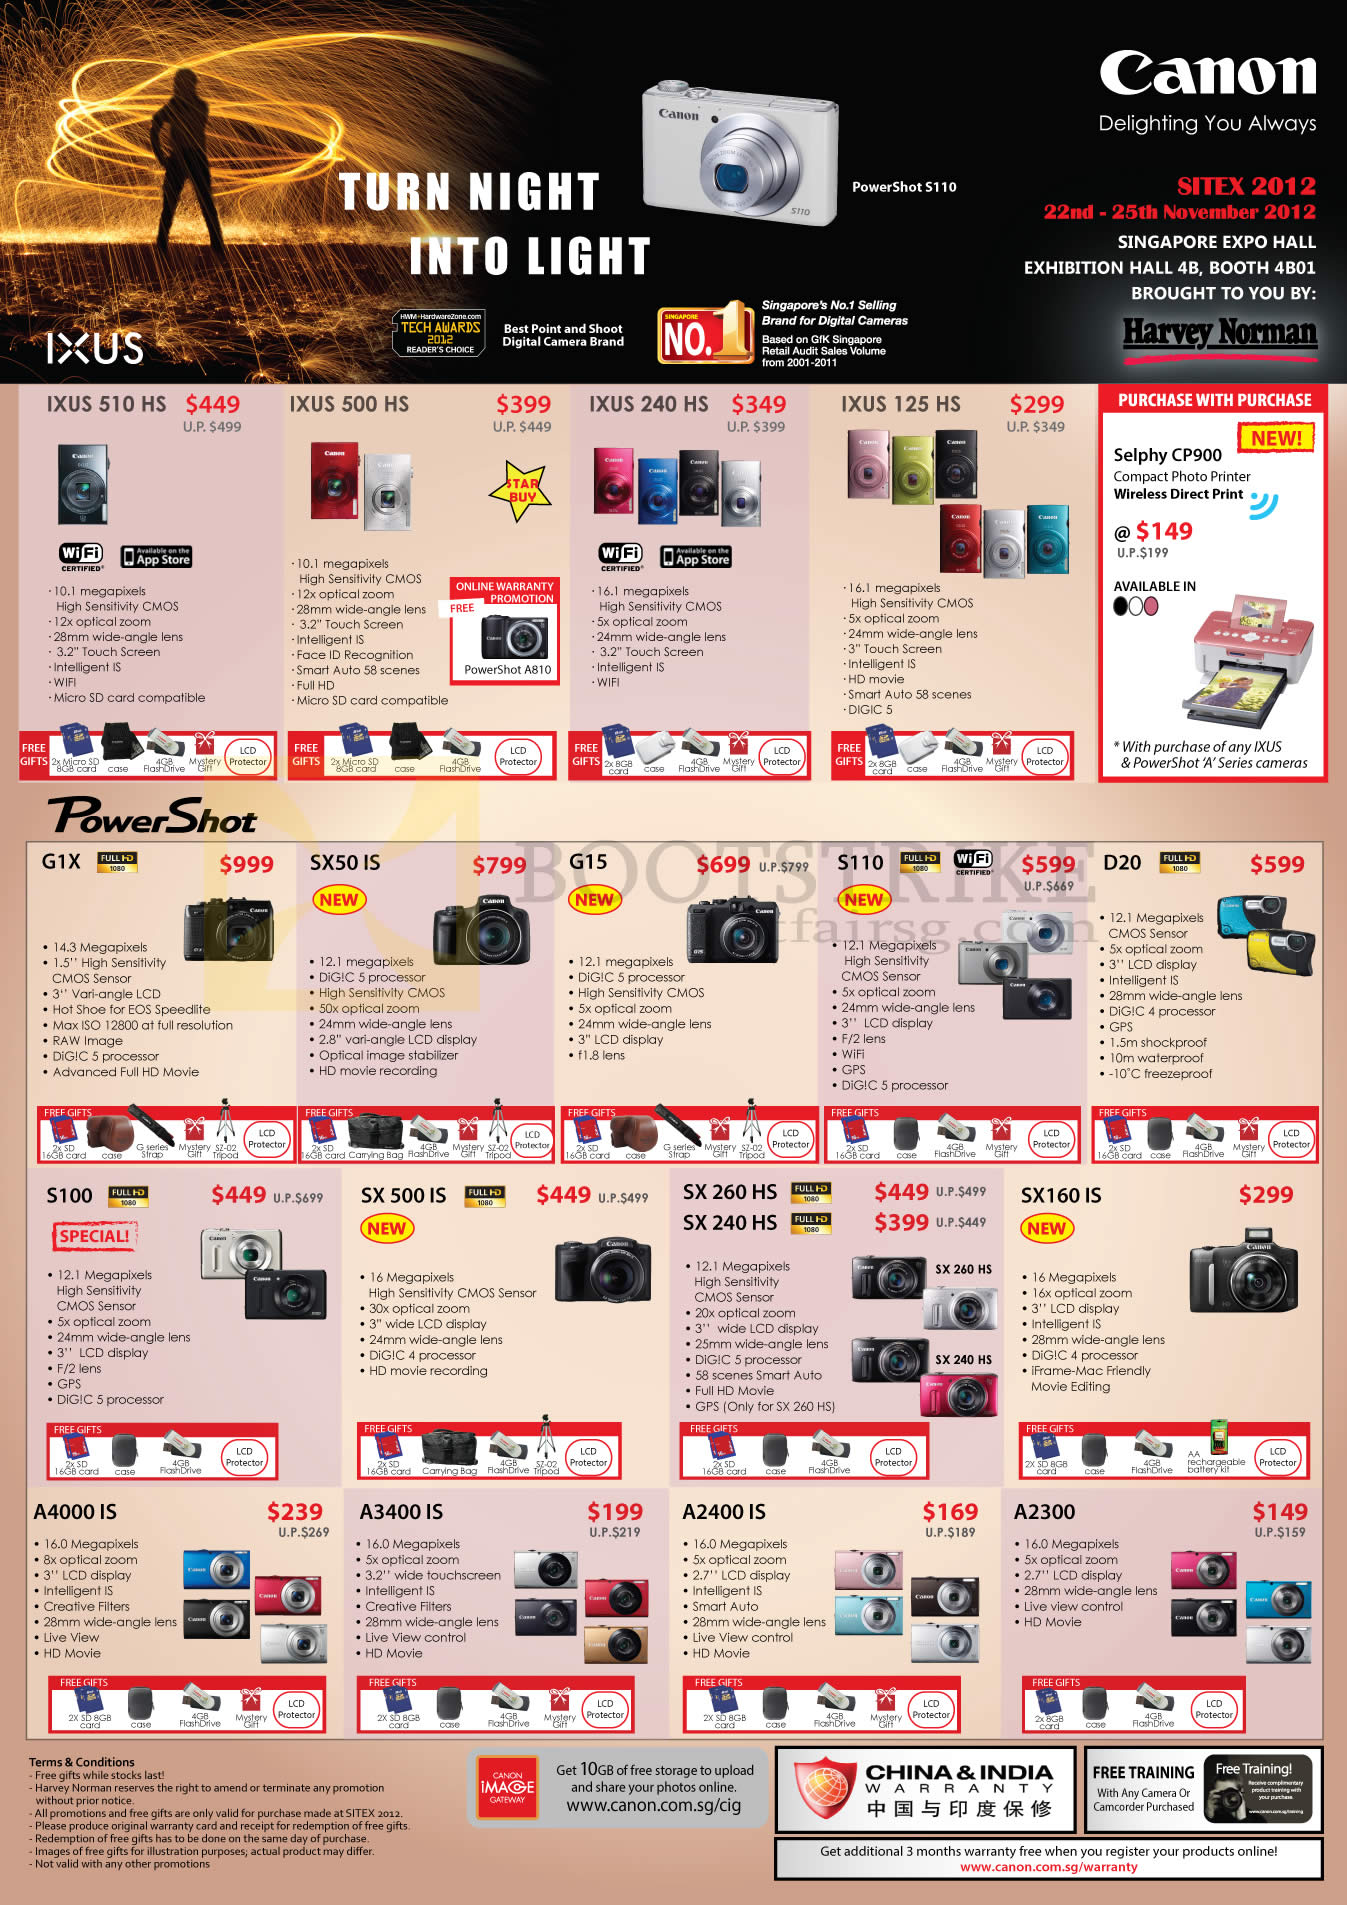 SITEX 2012 price list image brochure of Canon Digital Cameras IXUS 510HS, 500HS, 240HS, 125HS, PowerShot G1X, SX50Is, G15, S110, D20, S100, SX 500 IS, Sx 260HS, SX 160 IS, A4000 IS, A3400 IS, A2300